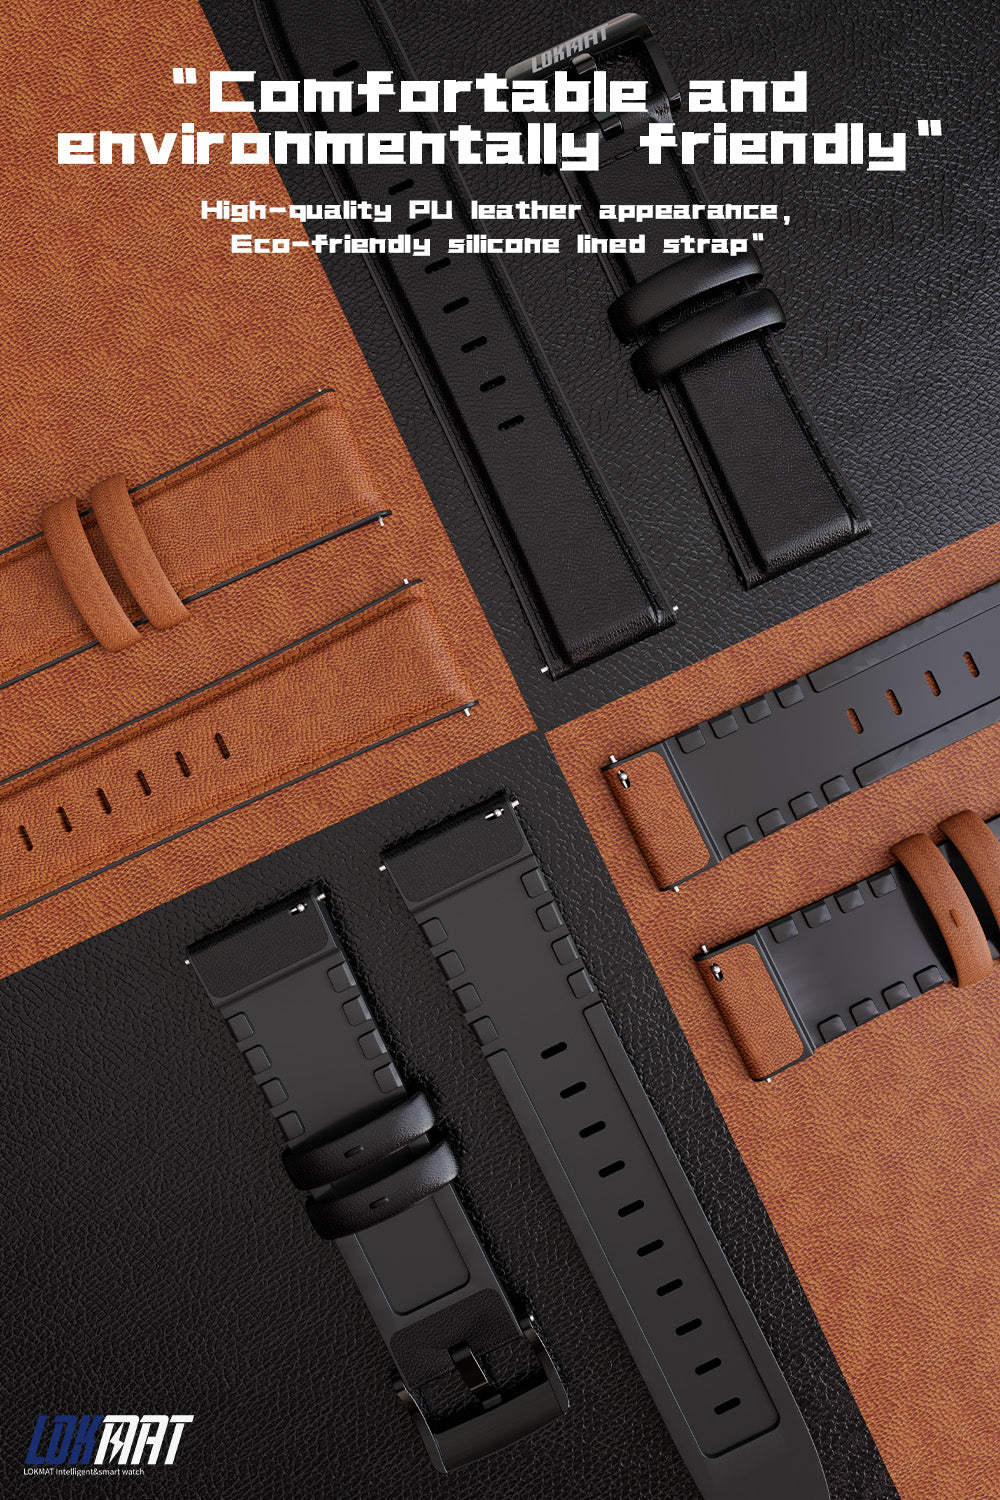 LOKMAT Universal Leather Strap Bracelet - 22mm